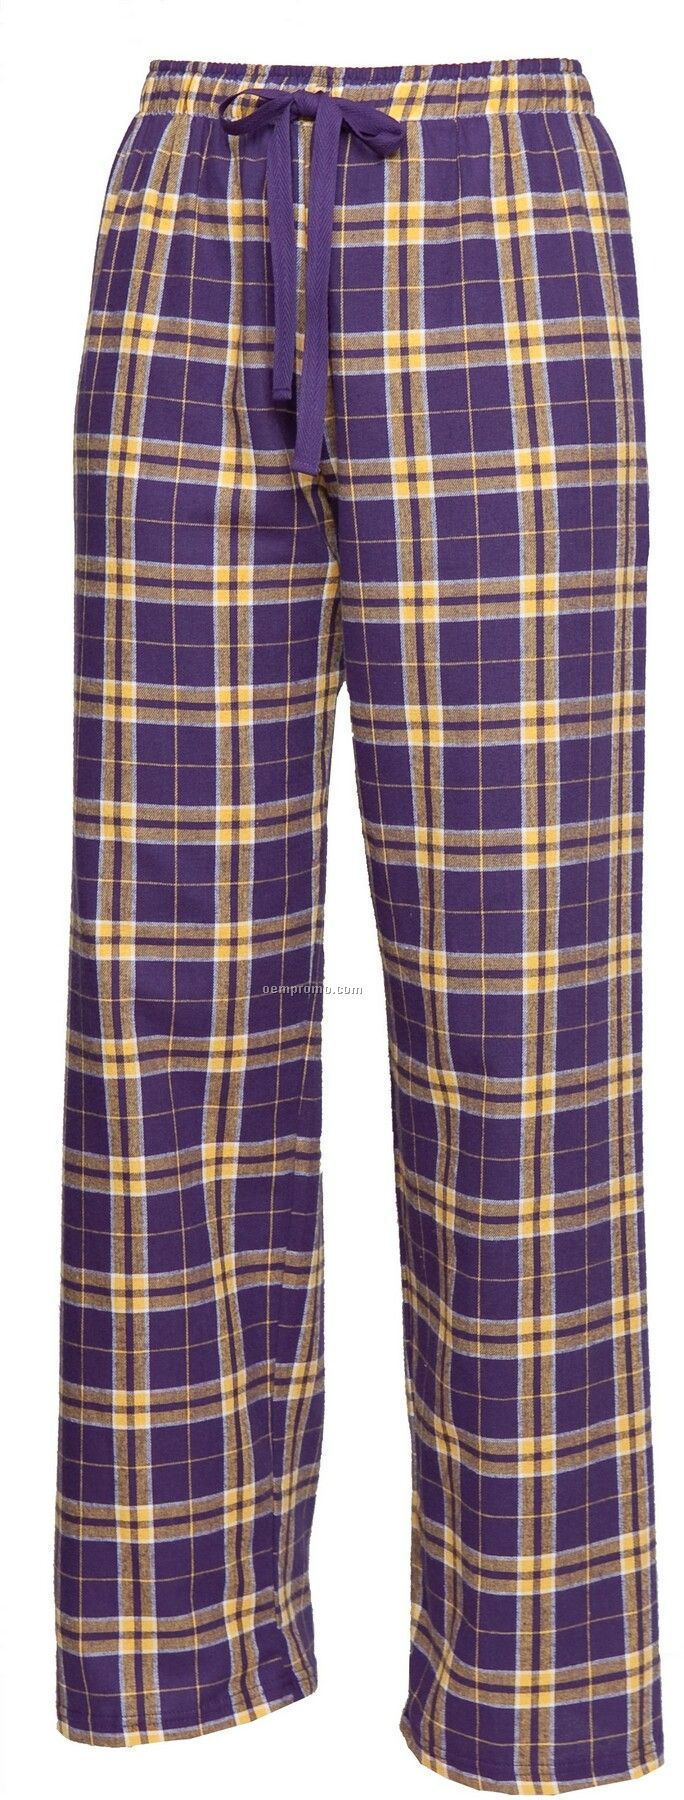 Adult Team Pride Flannel Pant In Purple & Gold Plaid